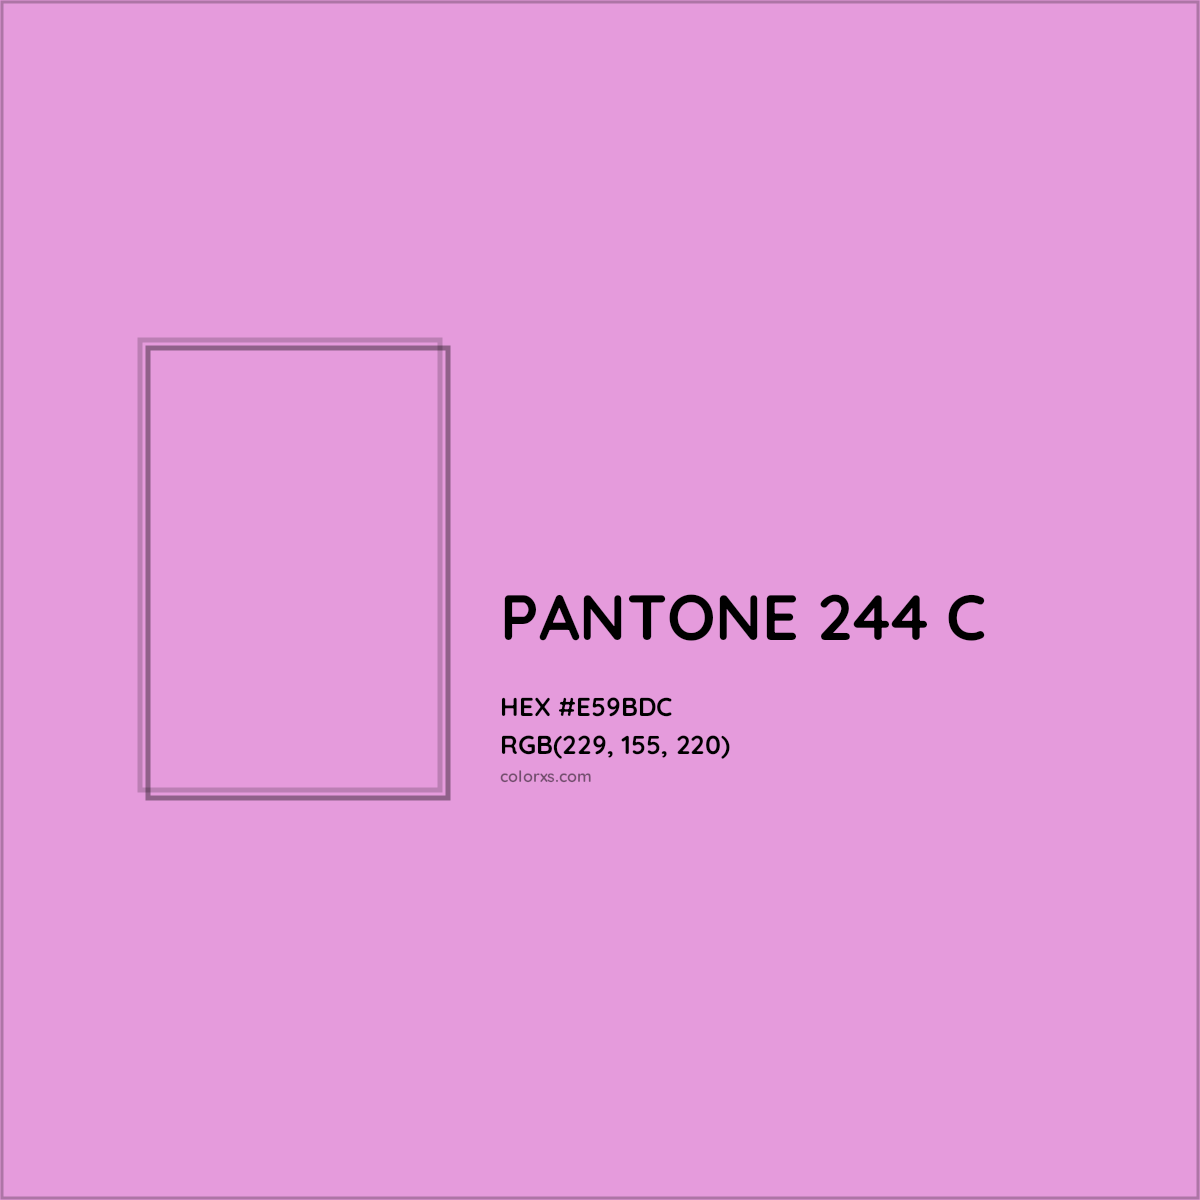 HEX #E59BDC PANTONE 244 C CMS Pantone PMS - Color Code